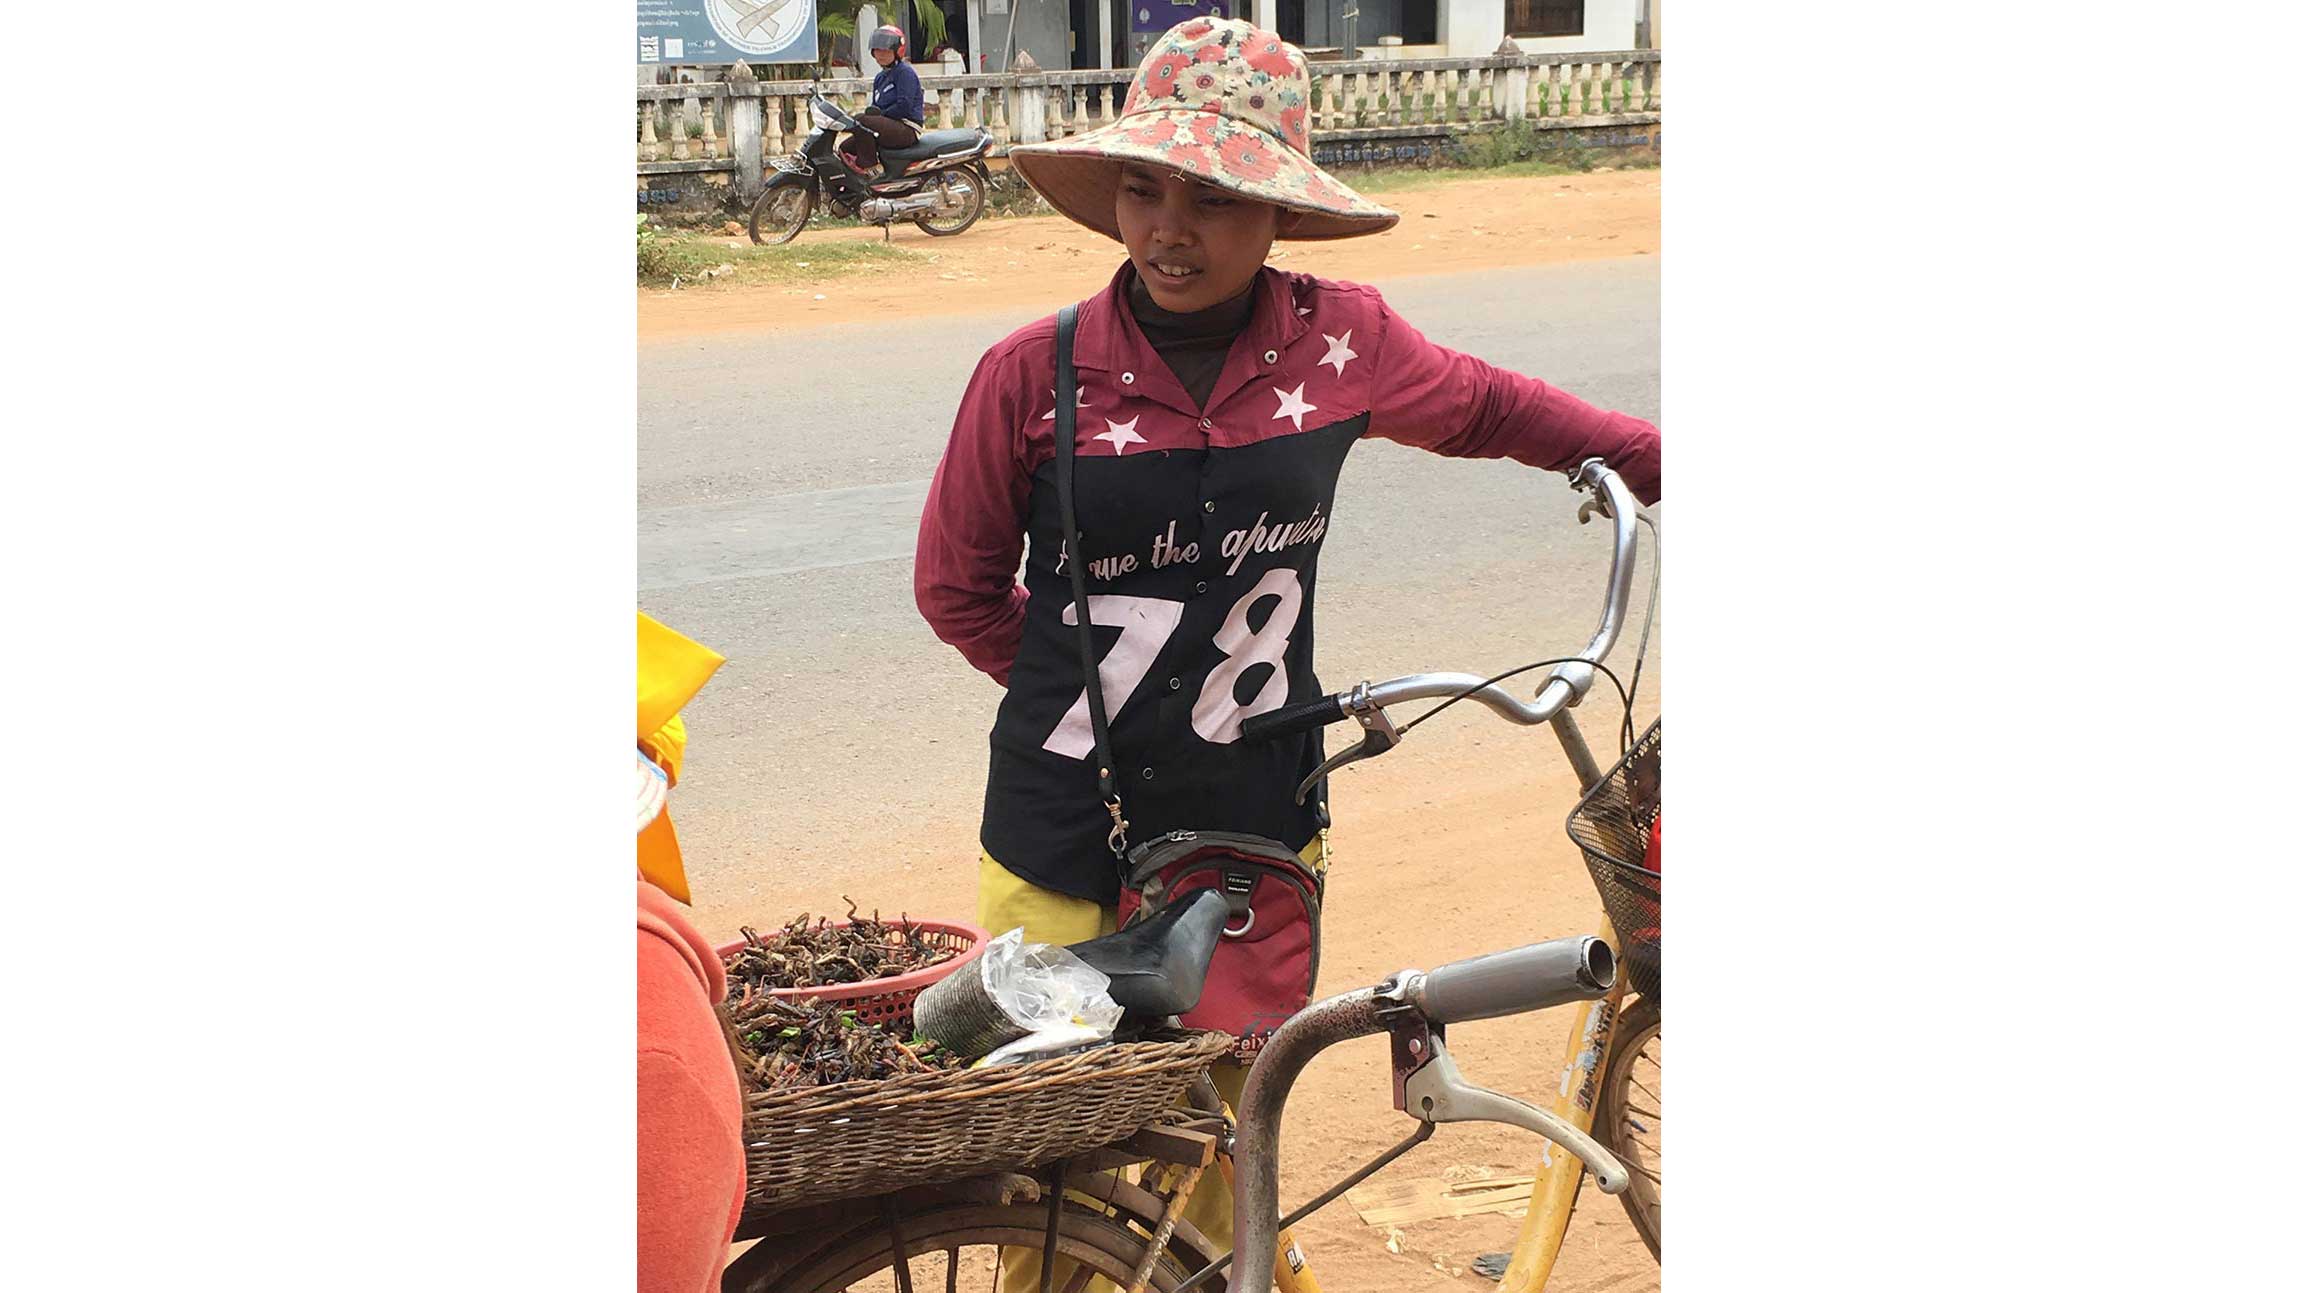 Asia Mekong Faces Bike Vendor 1